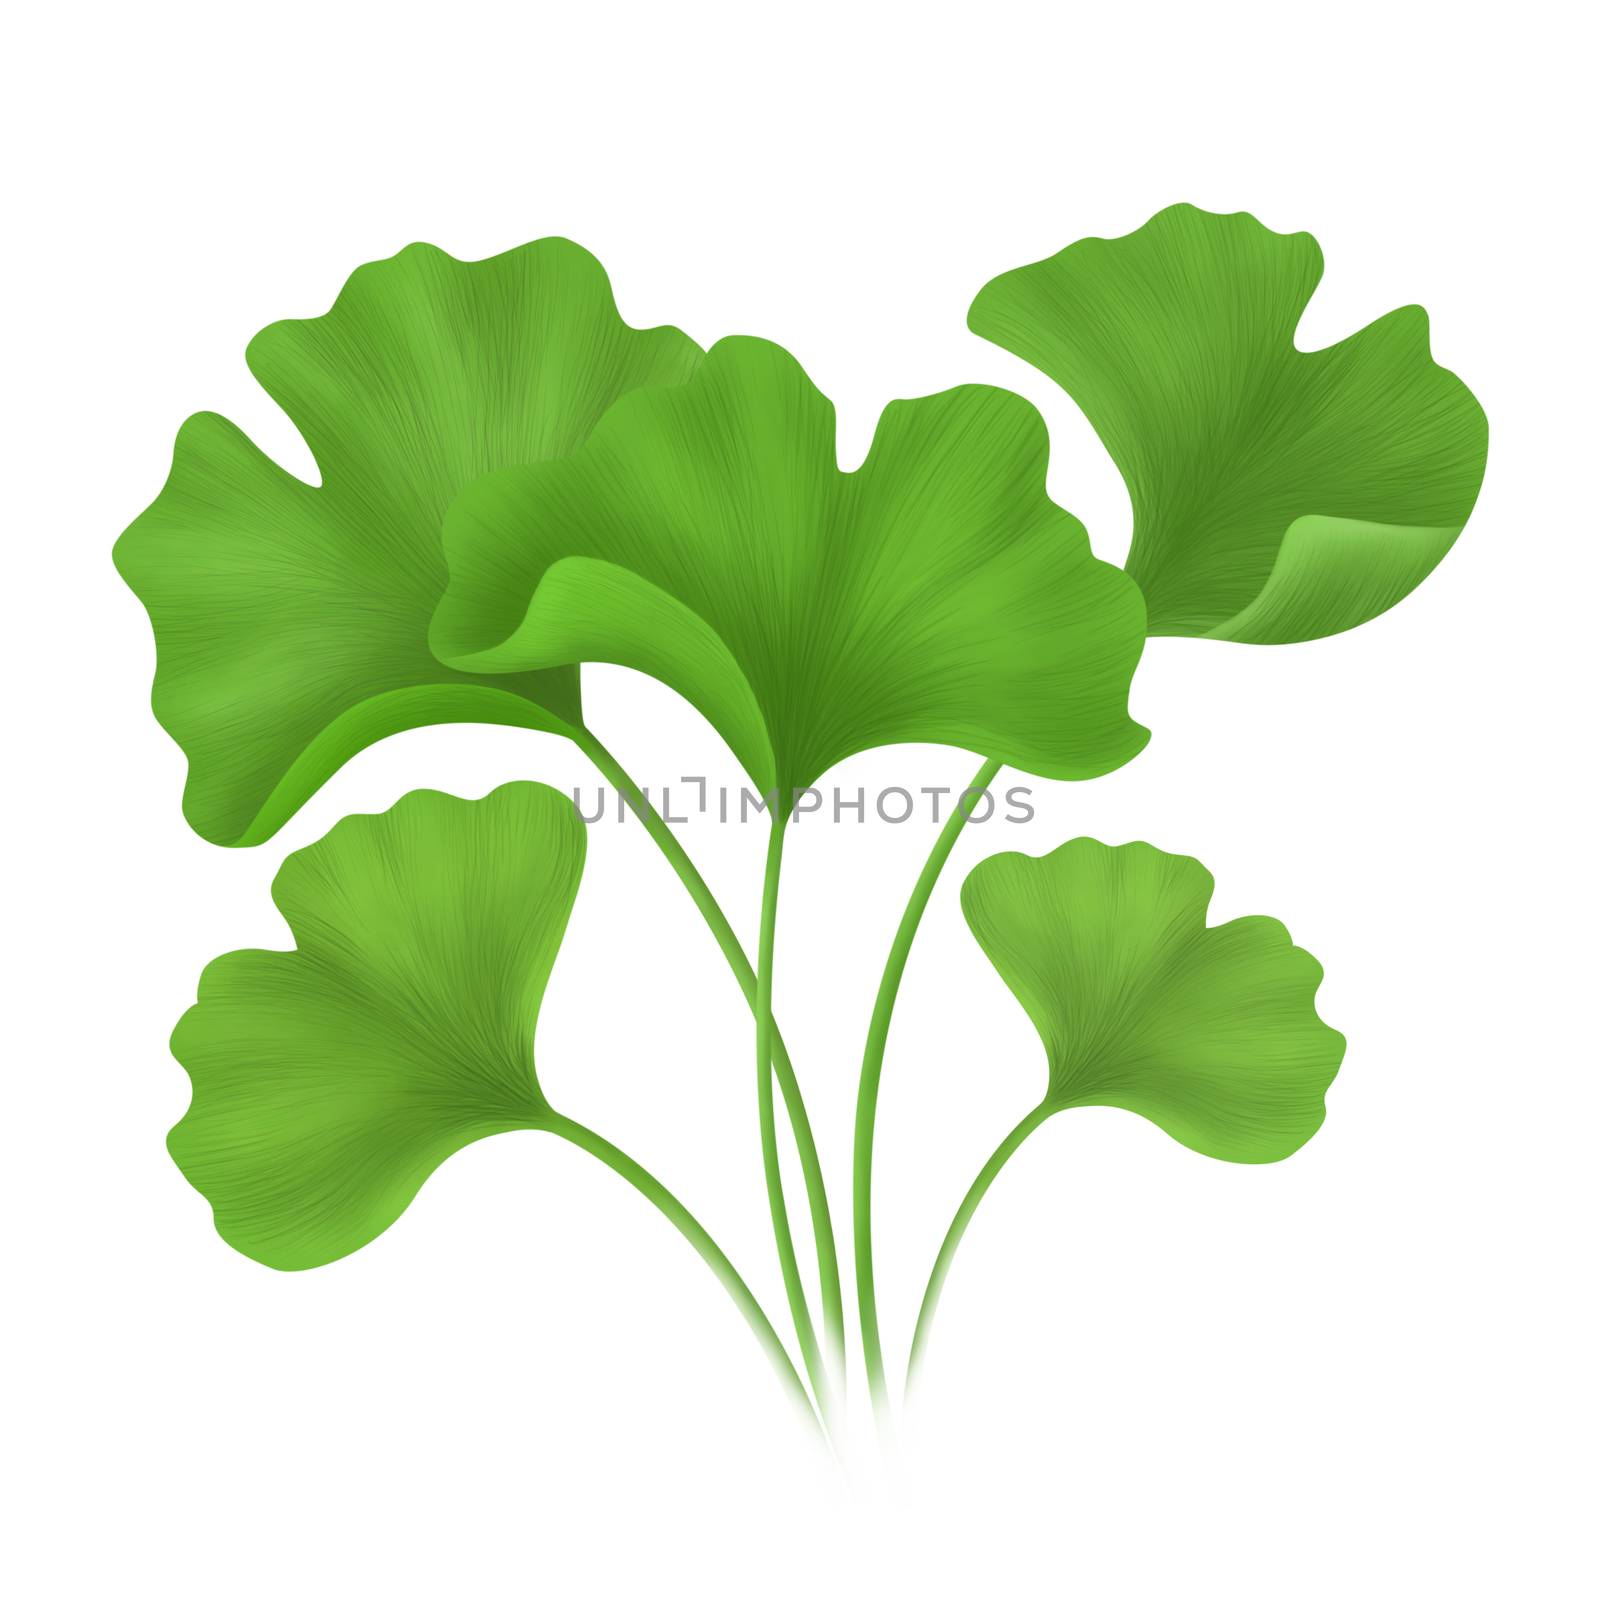 Digital illustration ginkgo biloba leaves isolated on white back by pt.pongsak@gmail.com